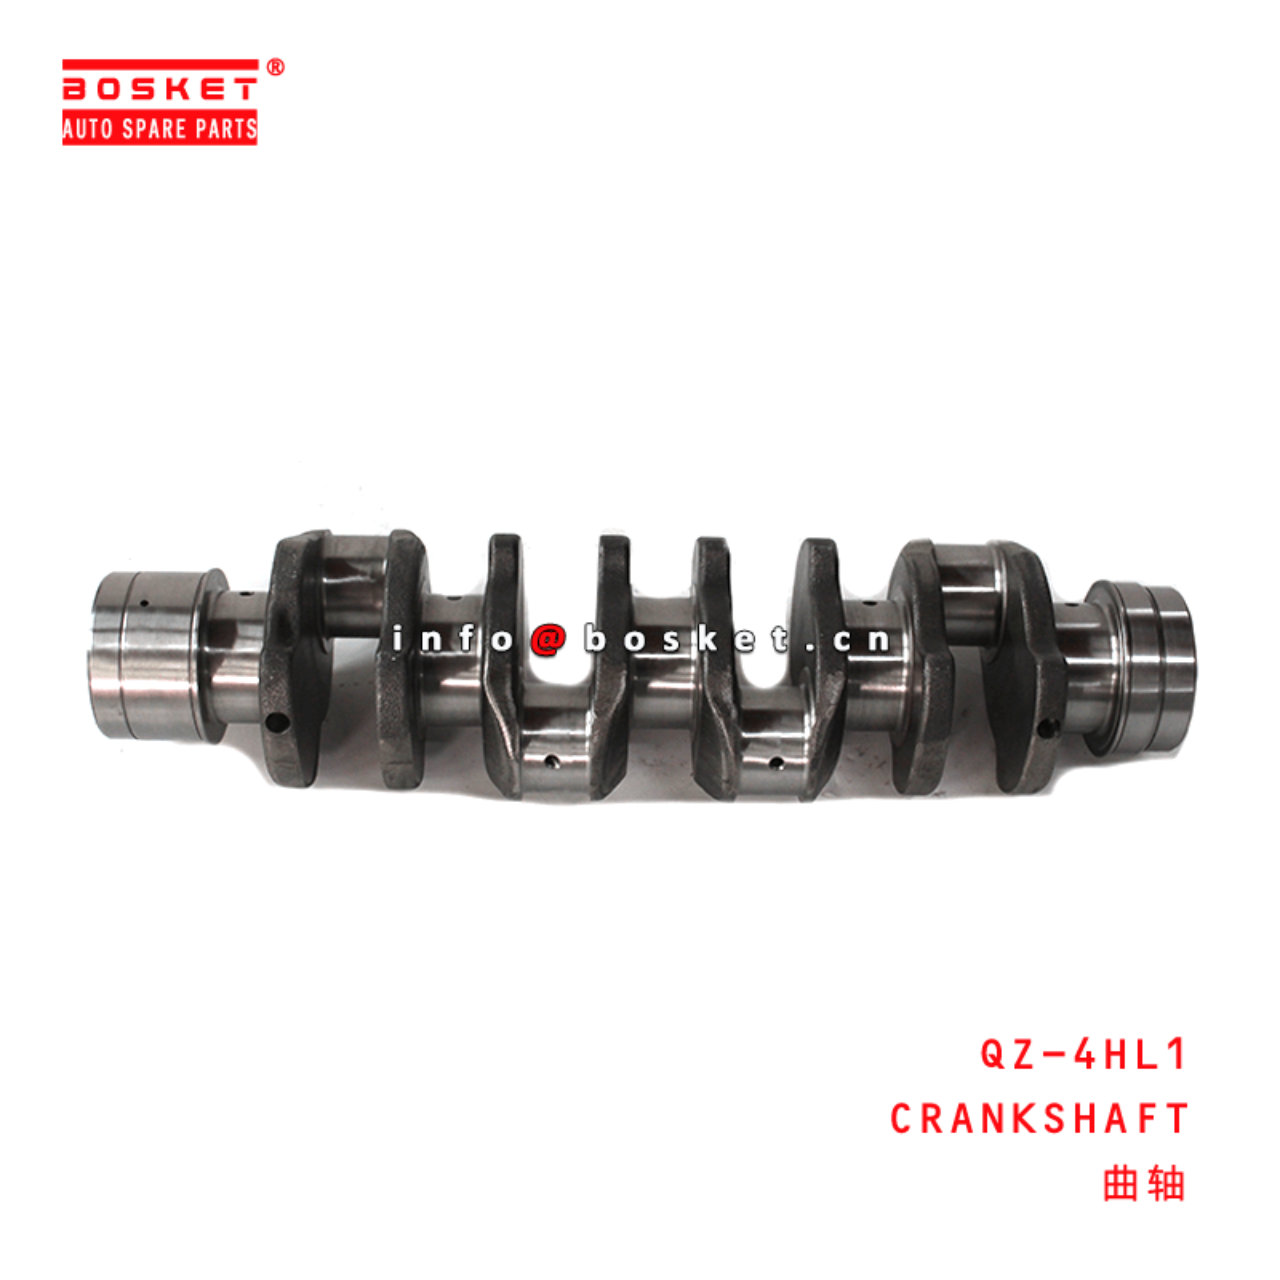  QZ-4HL1 Crankshaft Suitable for ISUZU 4HL1